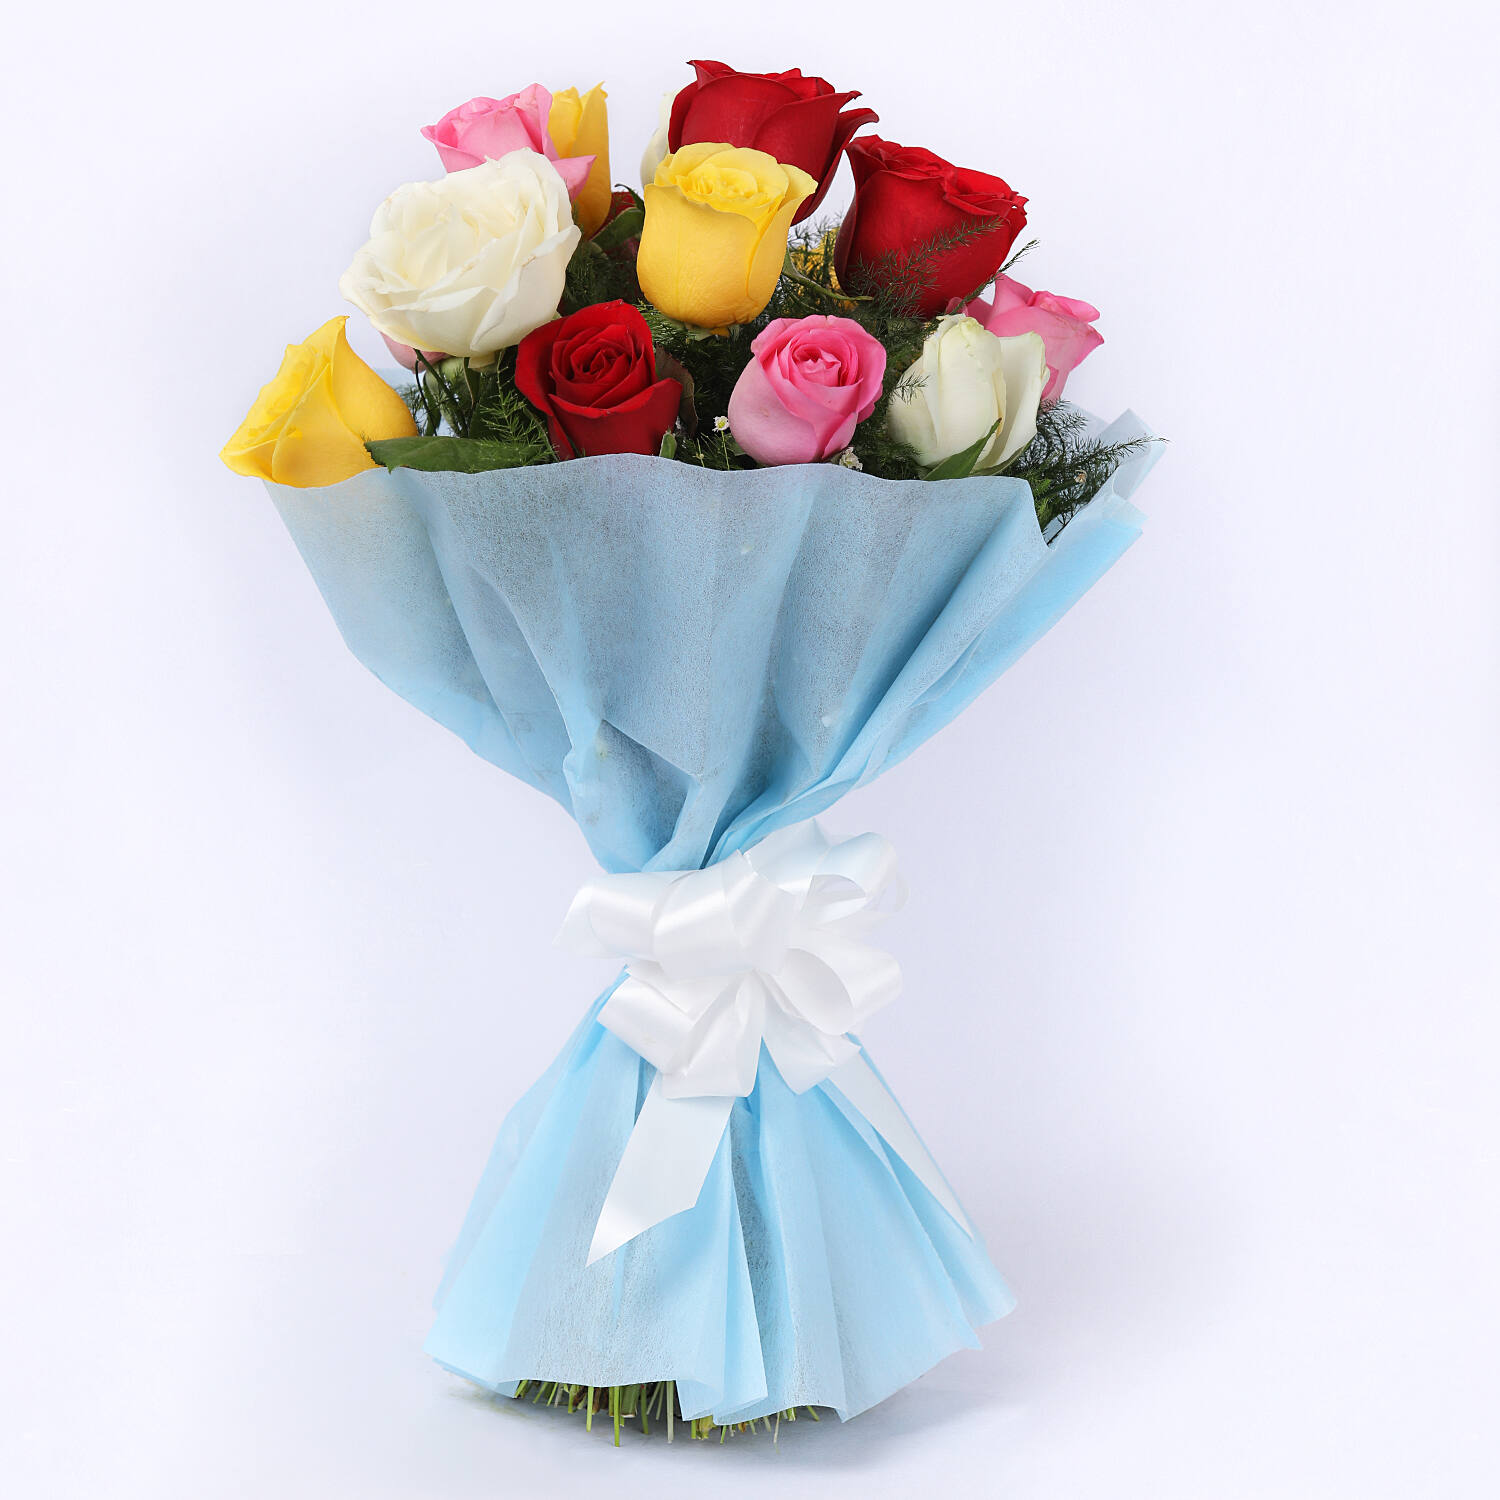 Send Flowers to Bhubaneswar | Flower Delivery in Bhubaneswar - MyFlowerTree